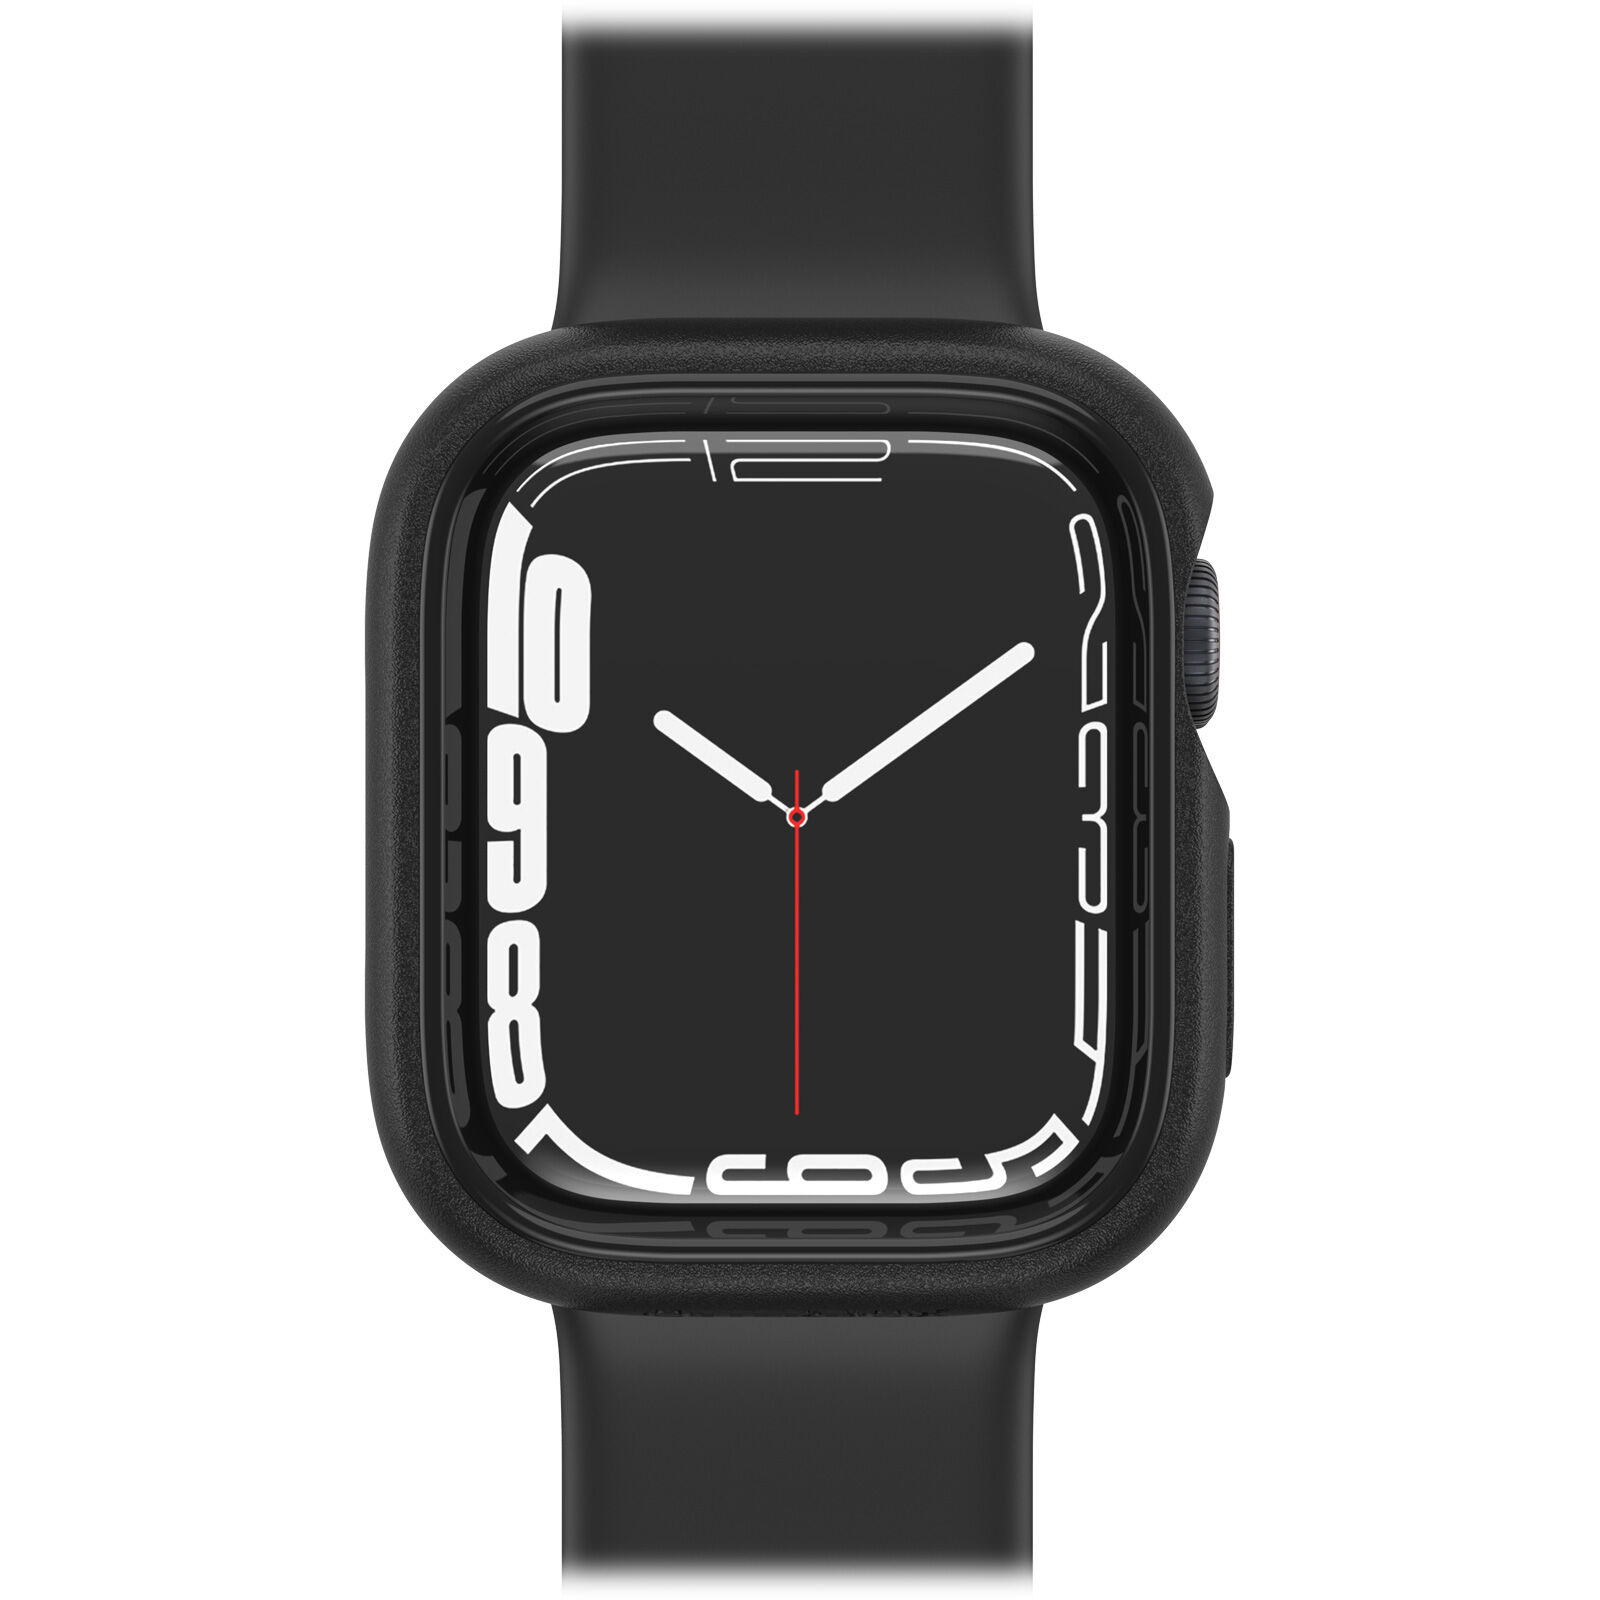  Apple Watch Series 7 Case EXO EDGE